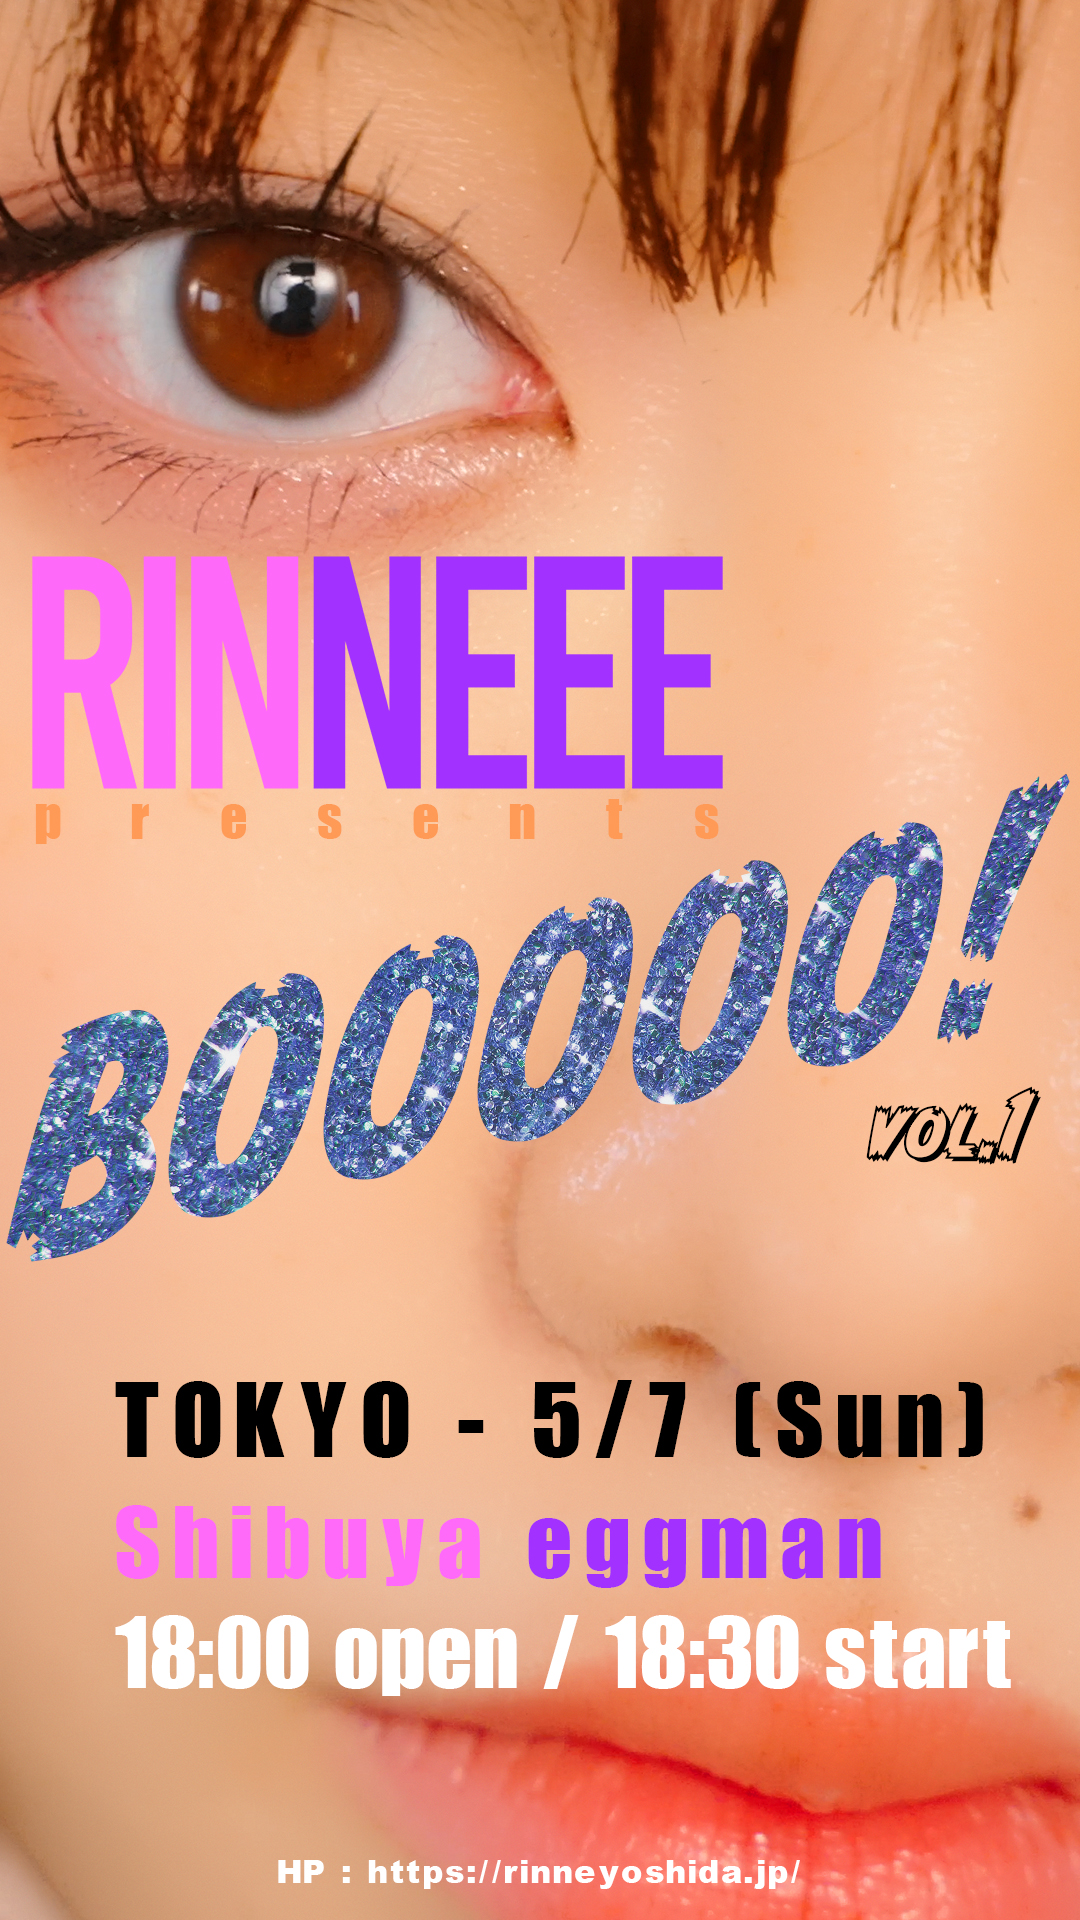 RINNEEE presents BOOOOO! Vol1 追加公演